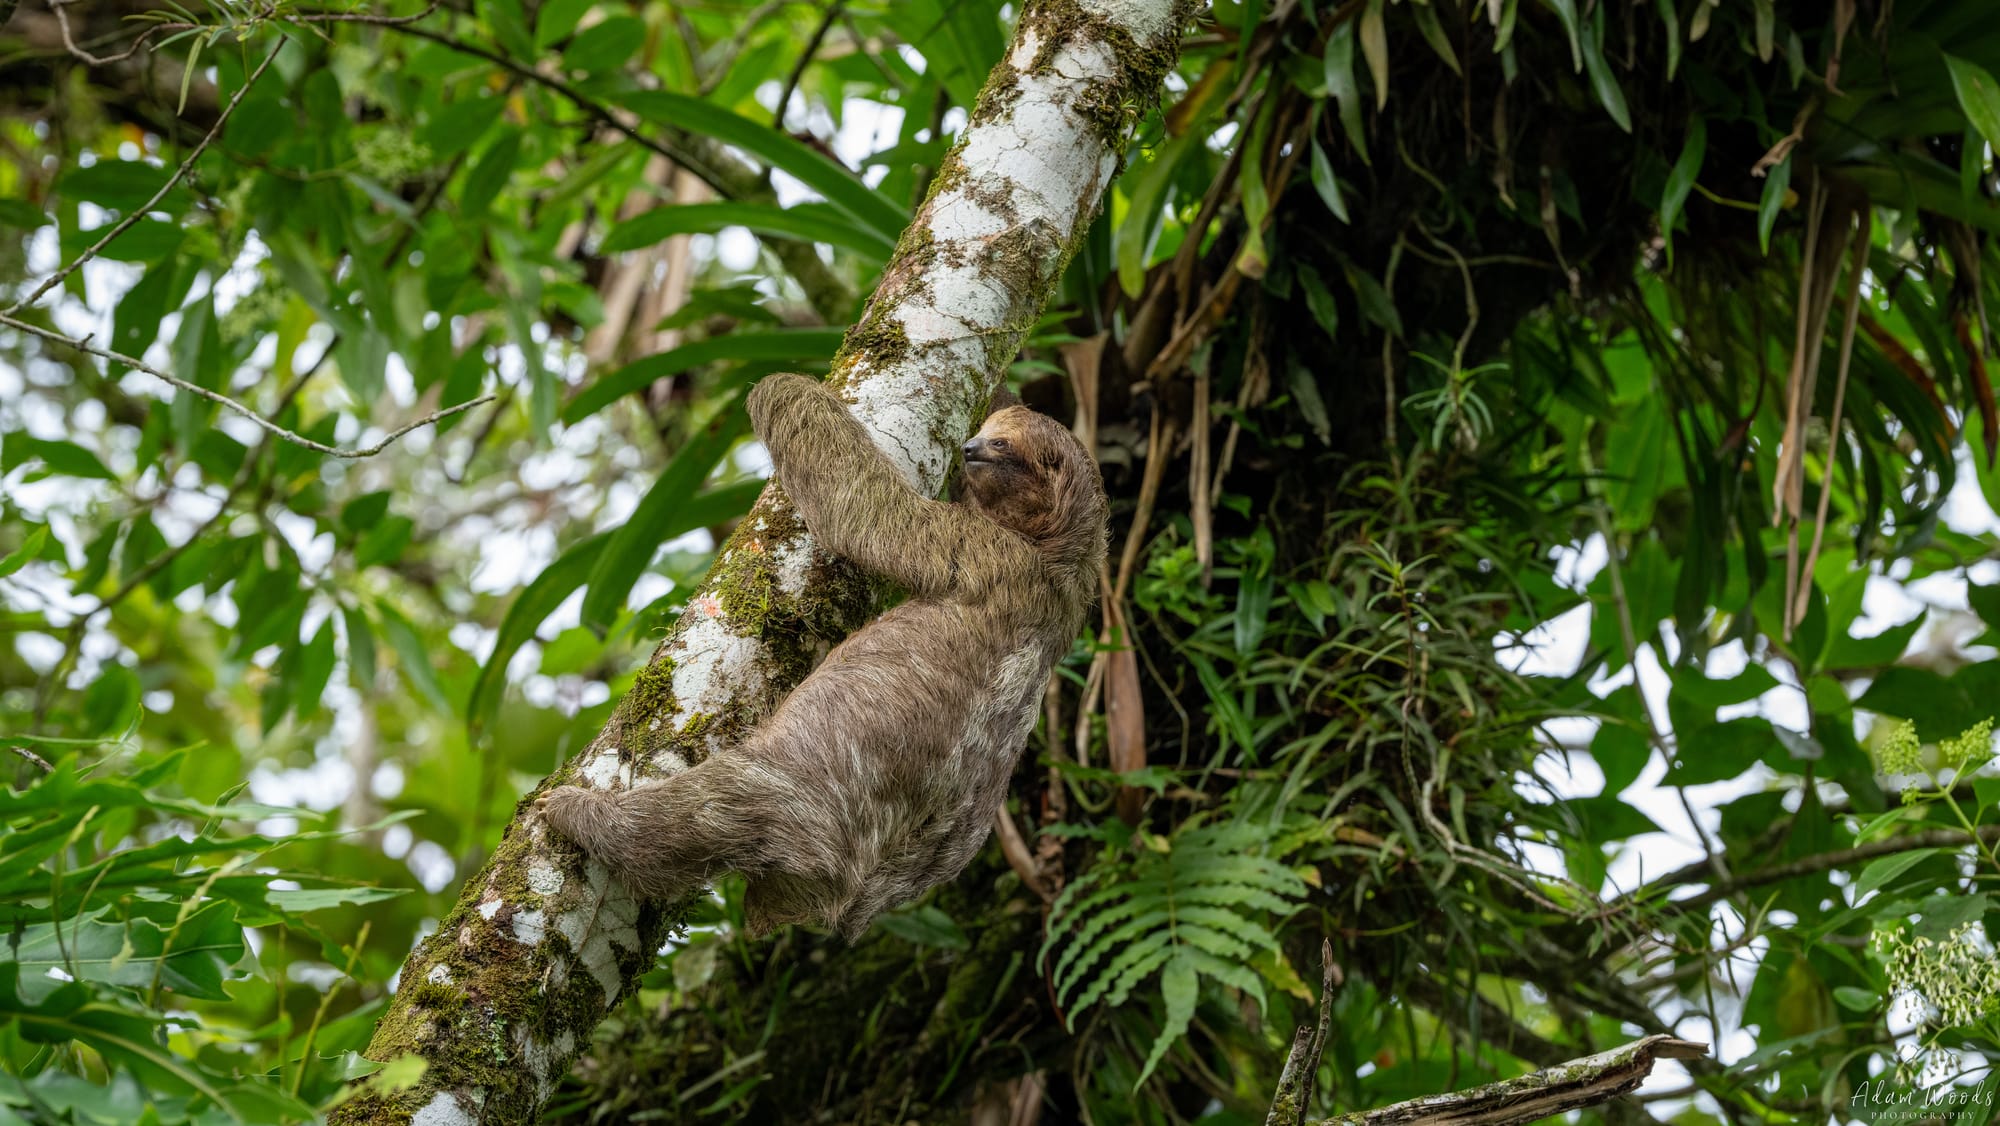 More Sloths!